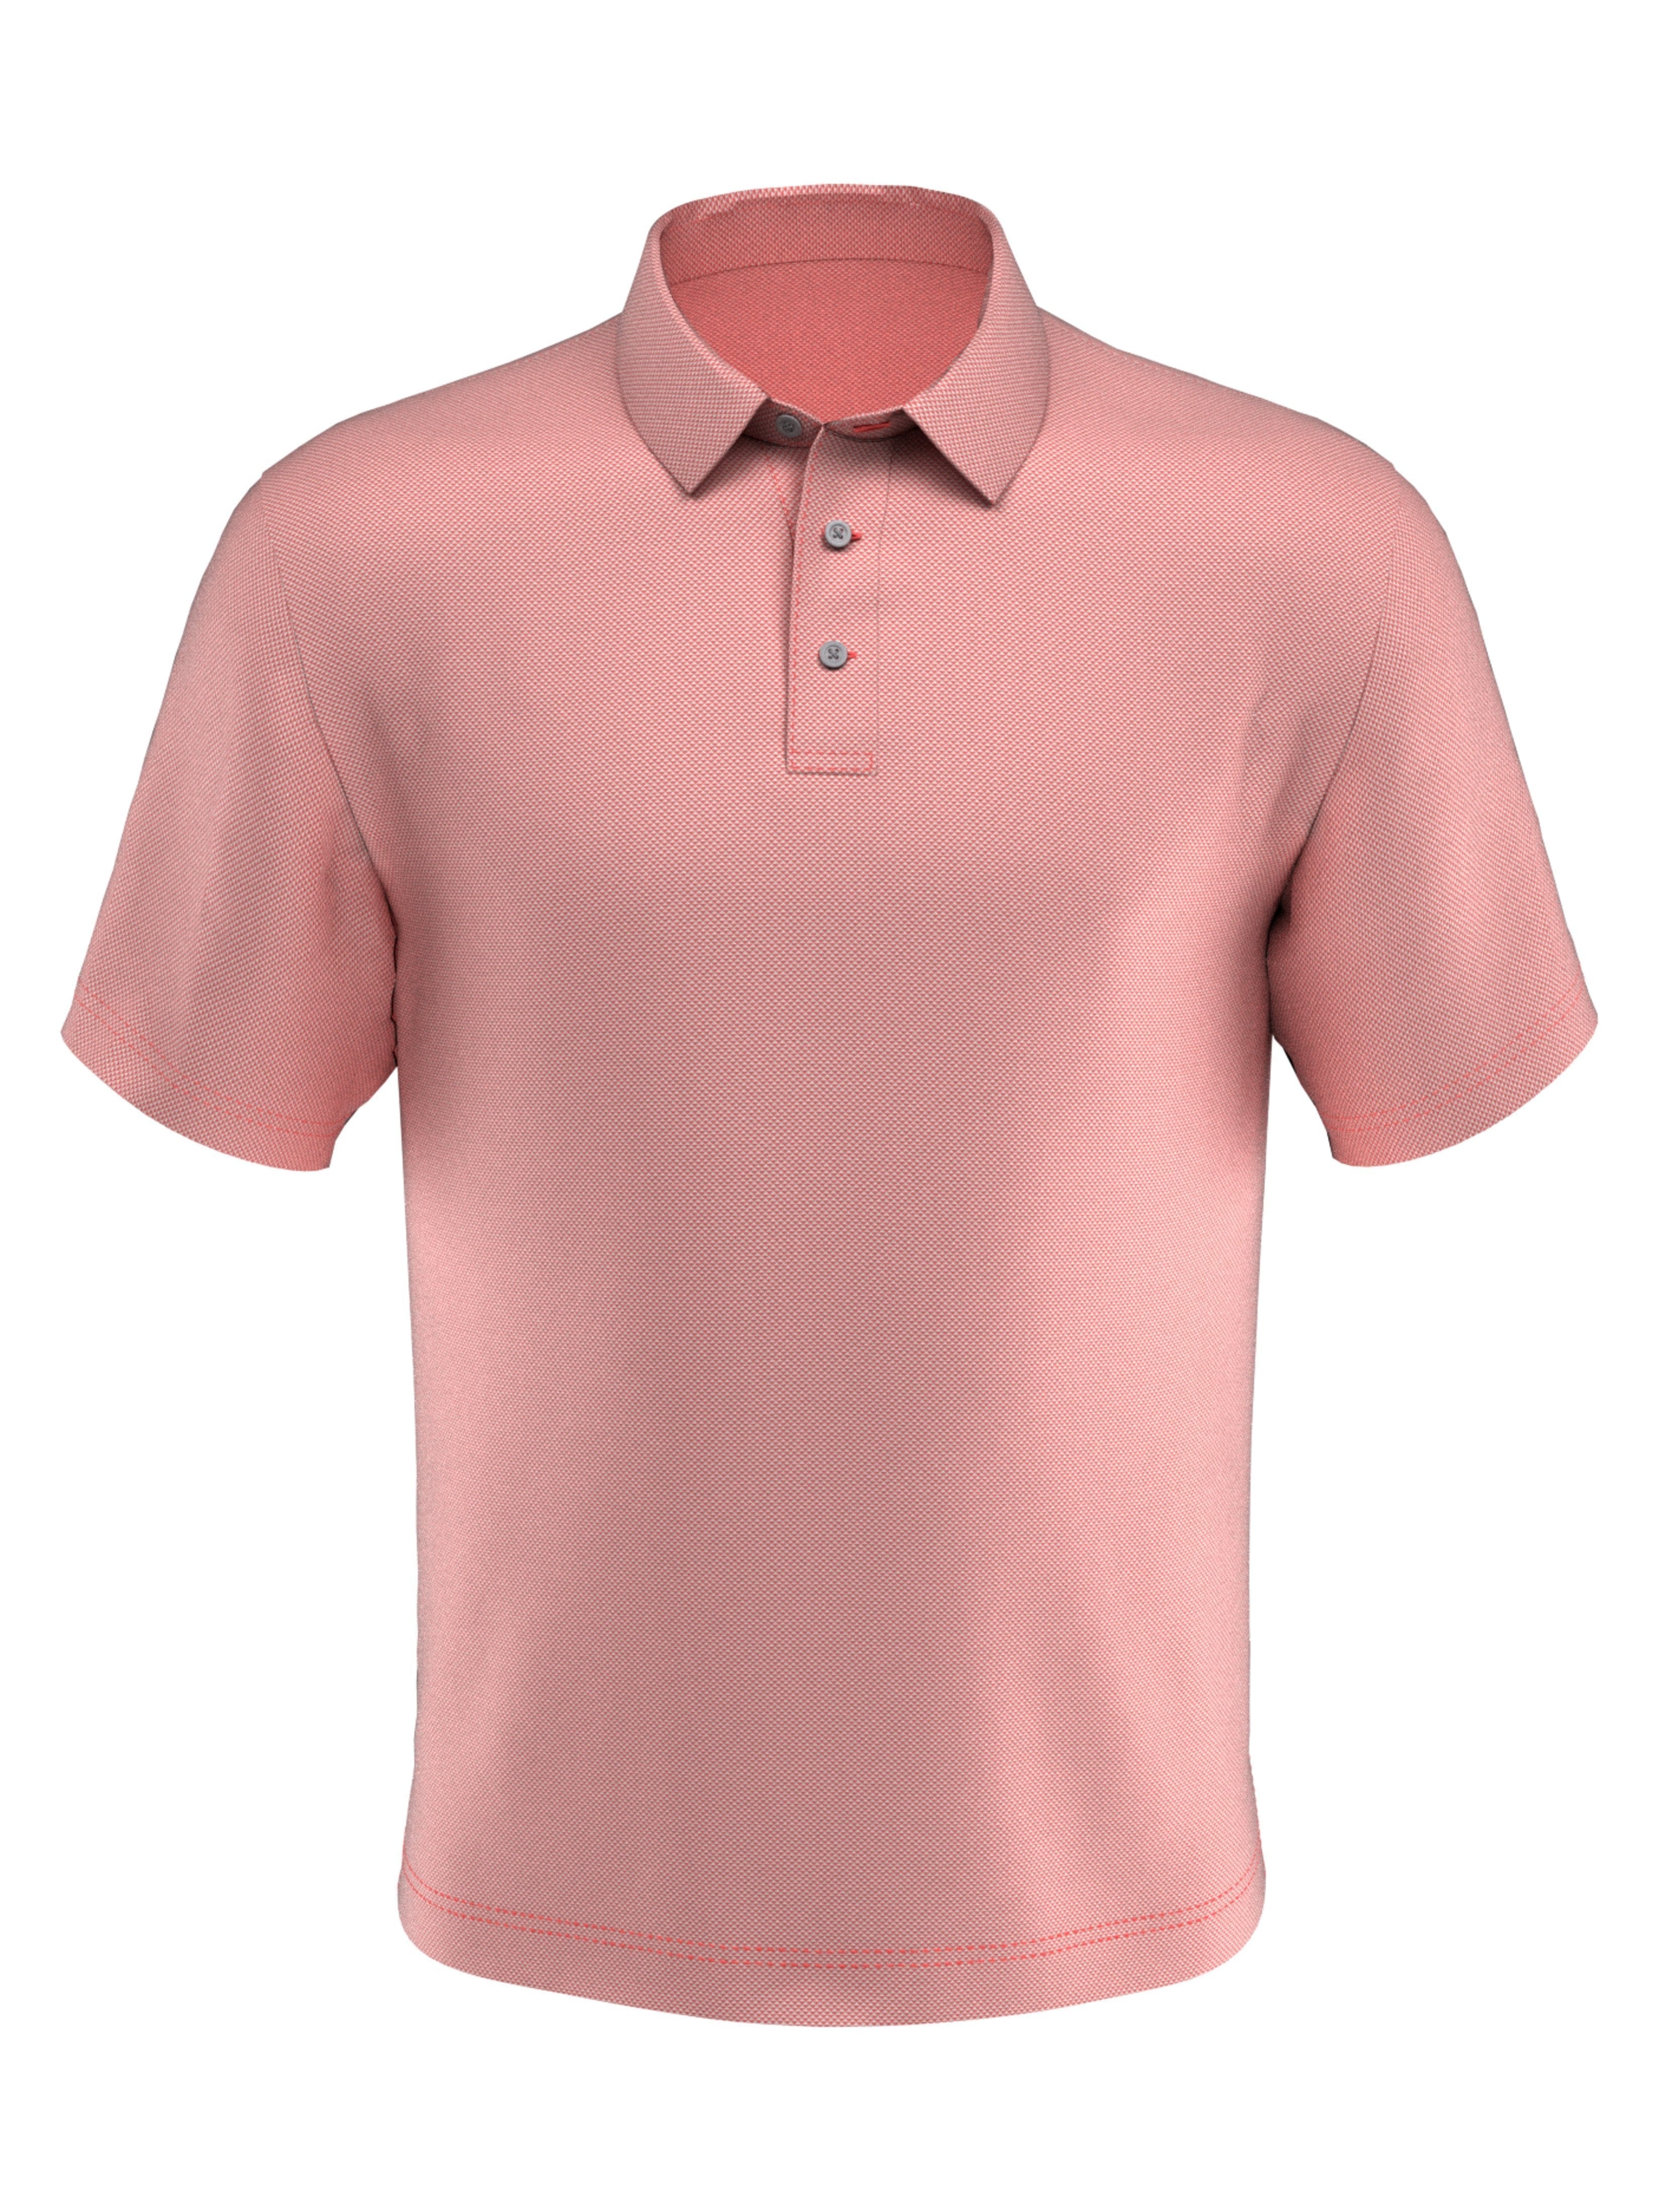 PGA TOUR Apparel Mens Mini Geometric Jacquard Polo Shirt, Size Medium, Dubarry Pink, 100% Polyester | Golf Apparel Shop